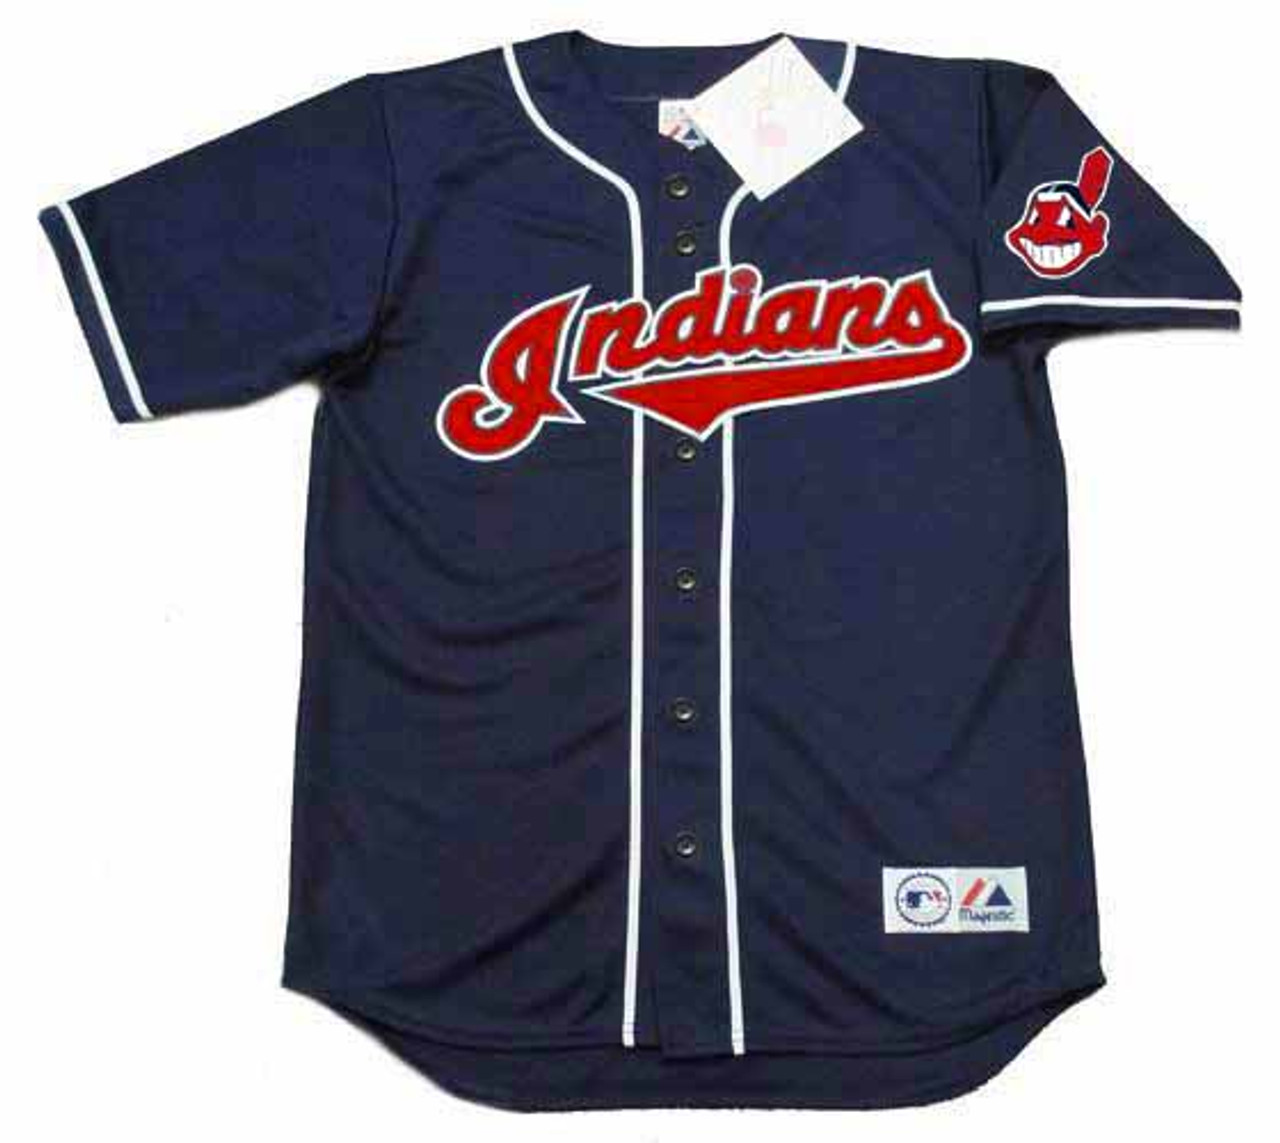 St Louis Cardinals Youth Majestic MLB Baseball jersey Alternate